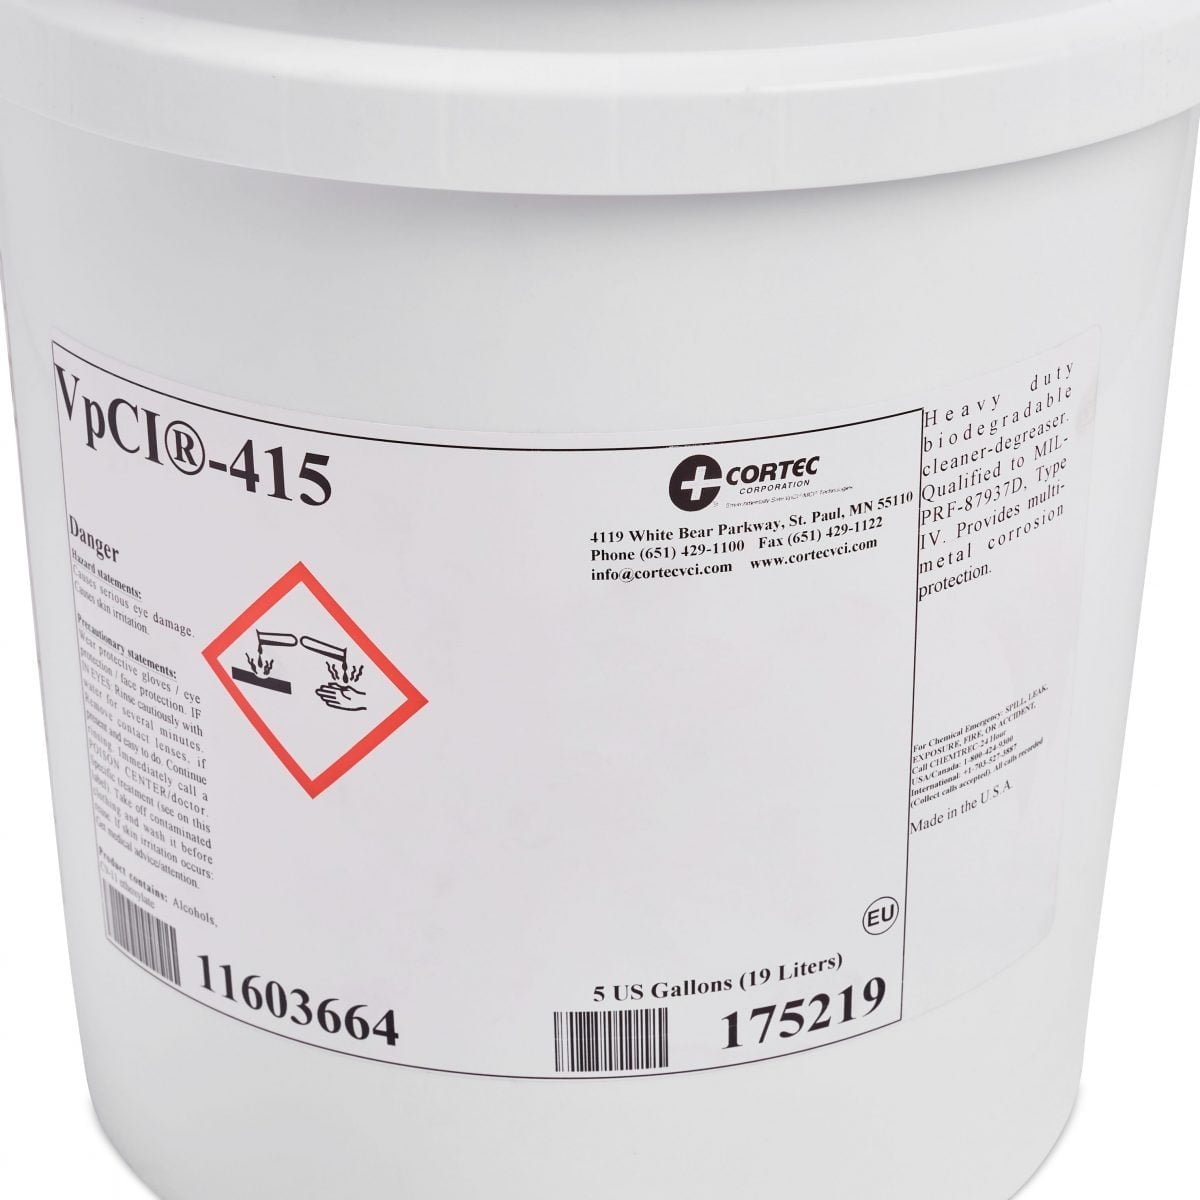 VpCI 415 Corrosion Inhibitors